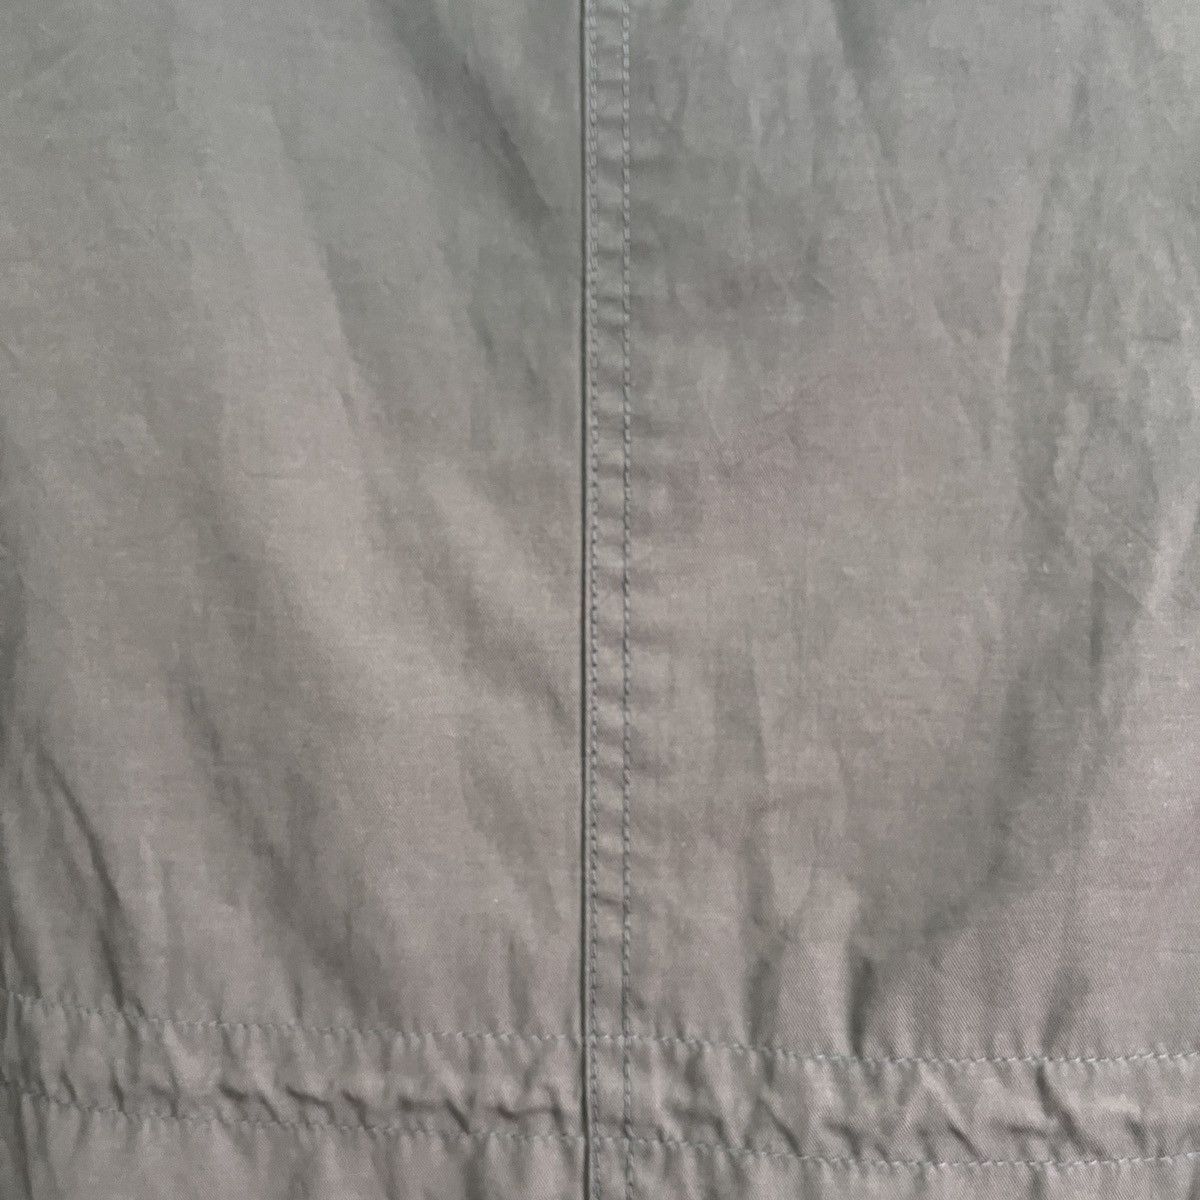 Japanese Brand - Vetements De Travail Long Parka Coat Fishtail Jacket Hooded - 12